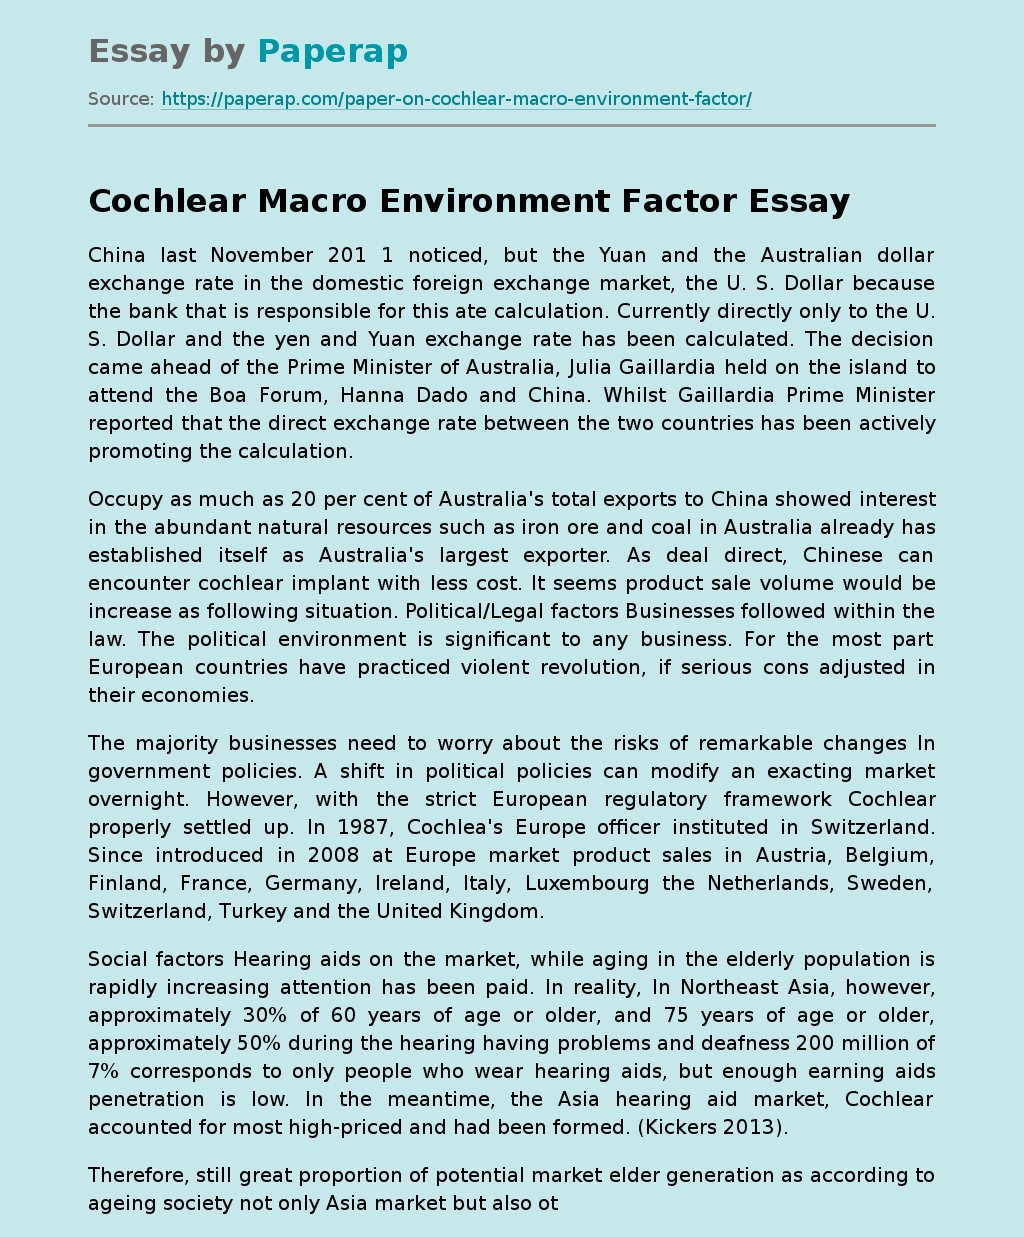 Cochlear Macro Environment Factor